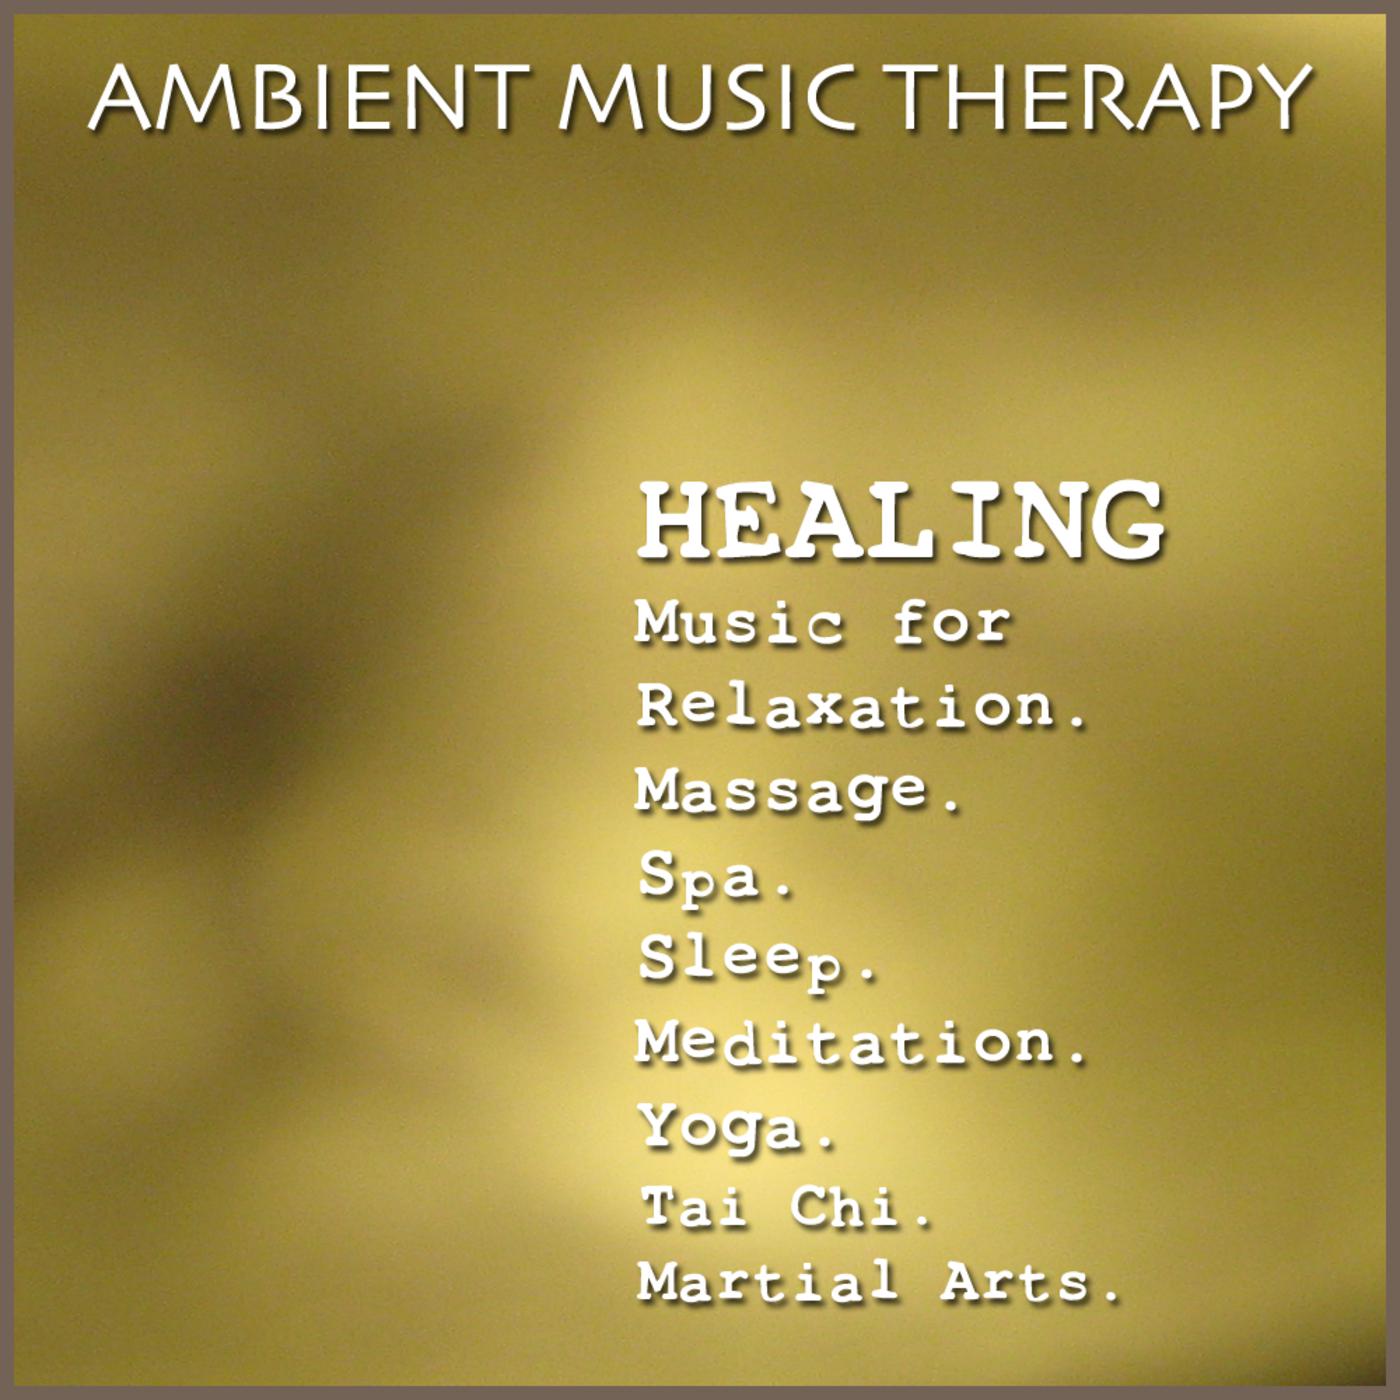 1. Healing Music for Relaxation. Massage. Spa. Sleep...